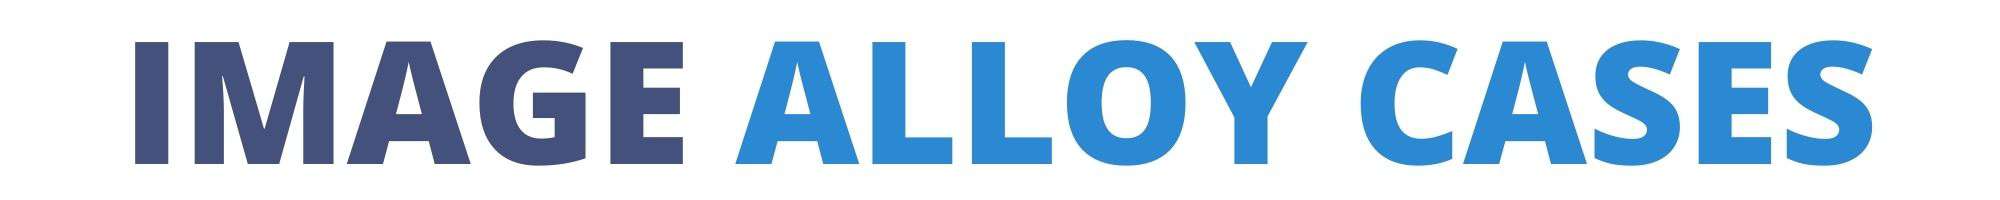 Image Alloy Cases Logo